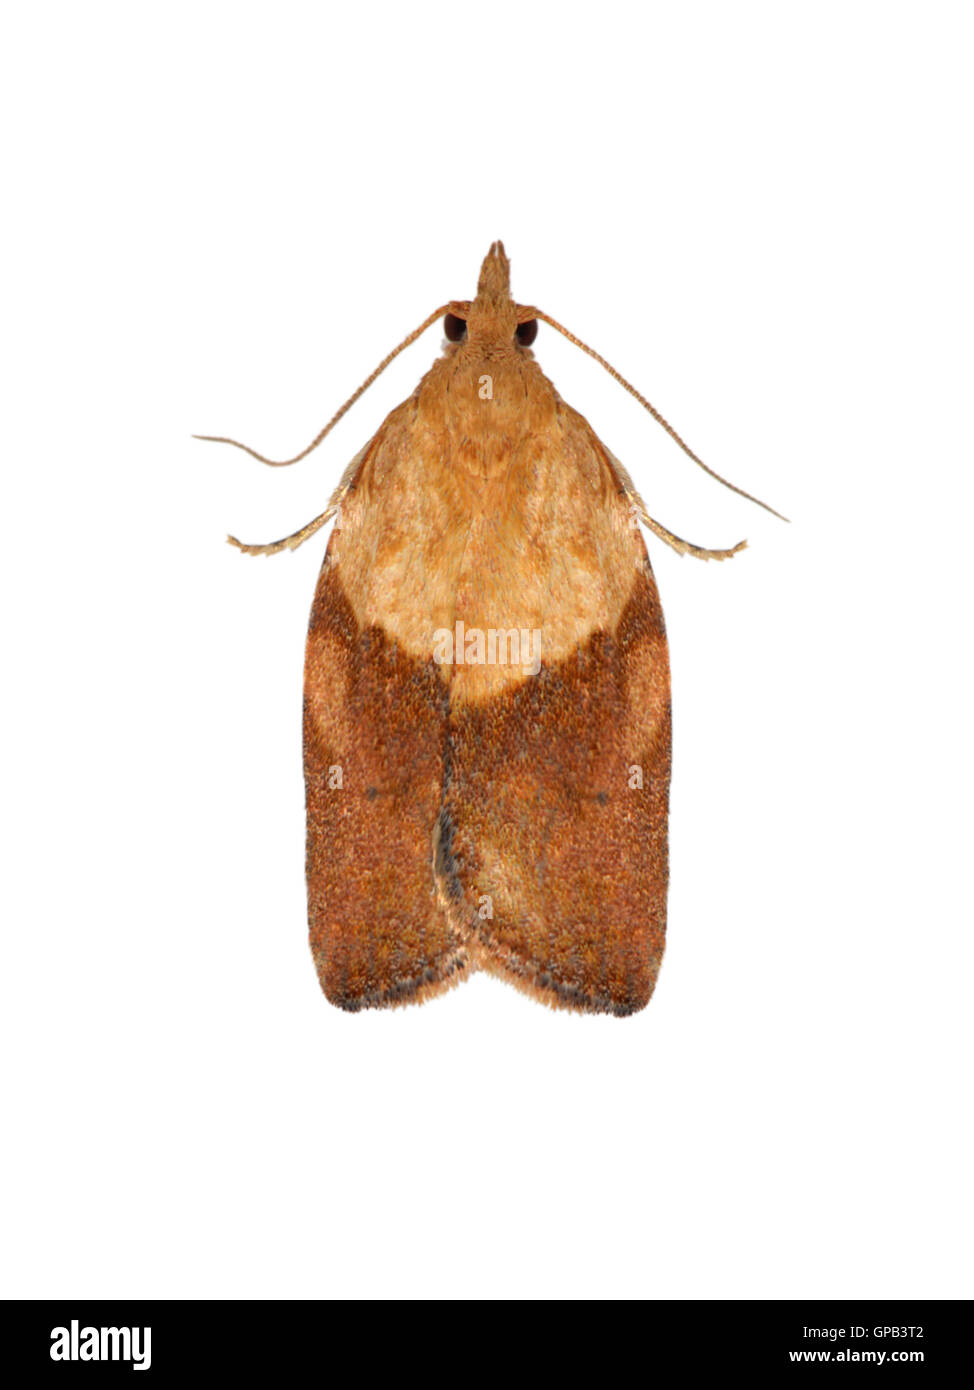 Epiphyas fruit moths in Western Australia – light brown apple moth